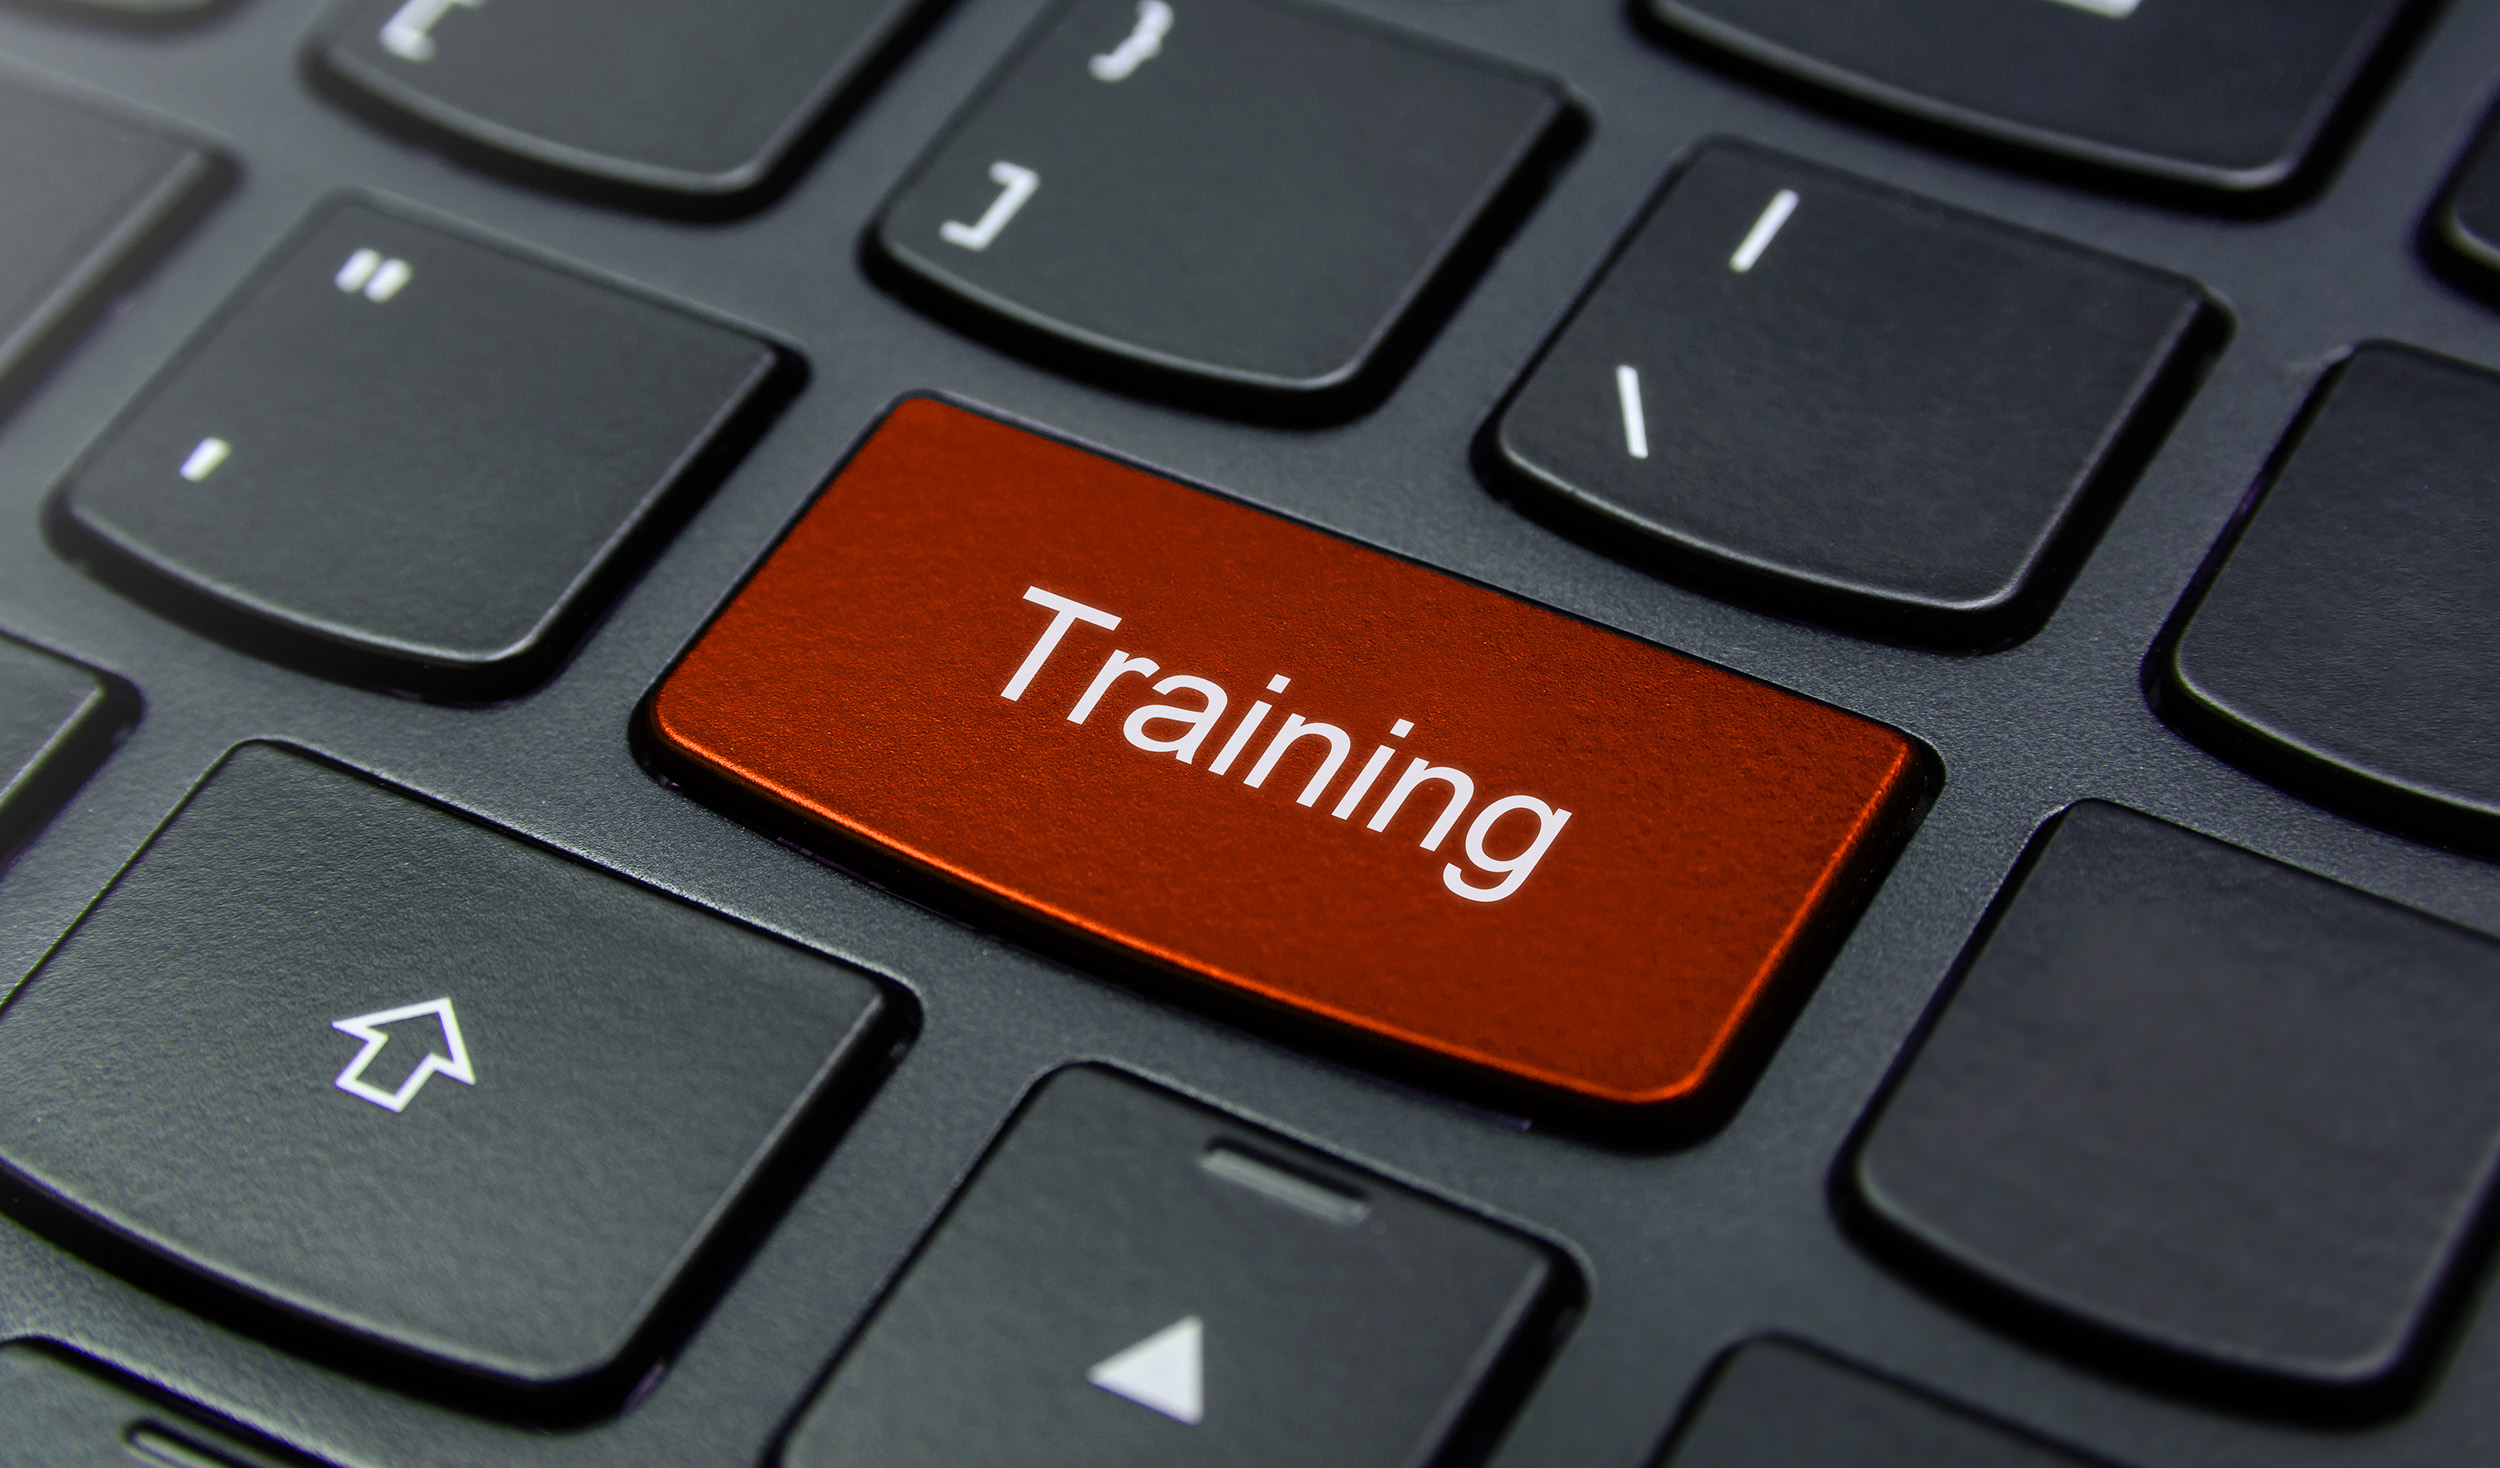 Implement Training Program - Training Button on Keyboard